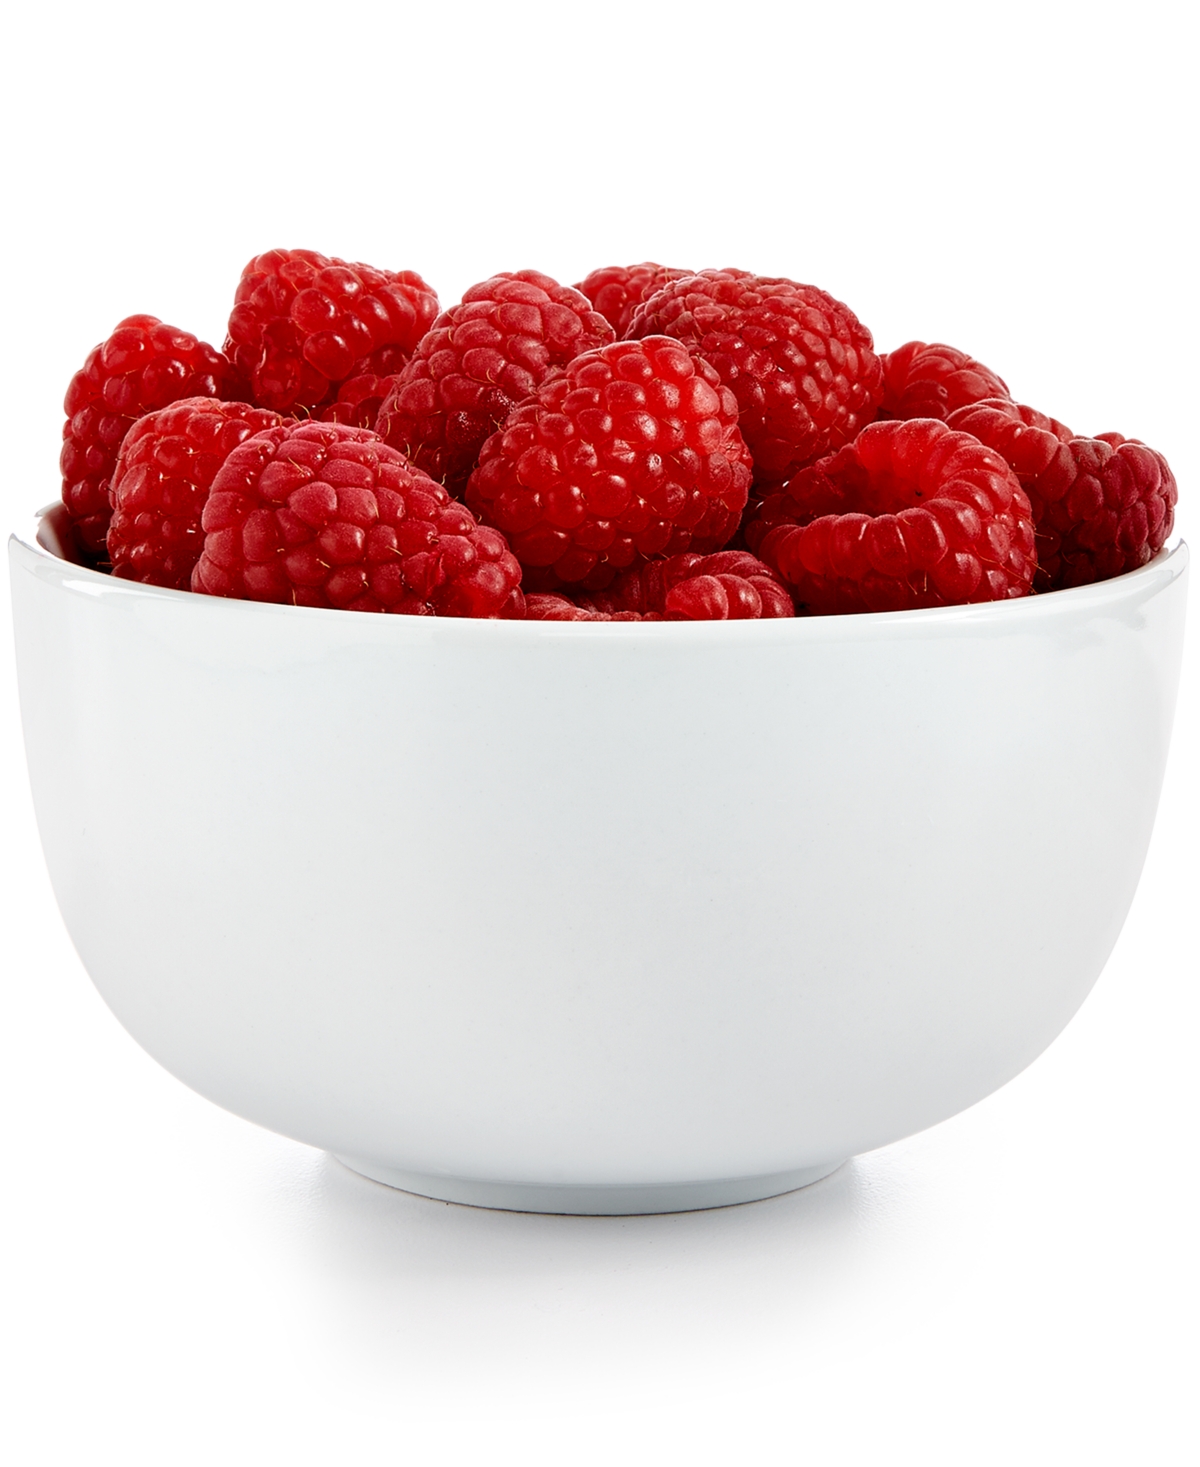 Whiteware 11 oz. Round Fruit Bowl, Created for Macy's